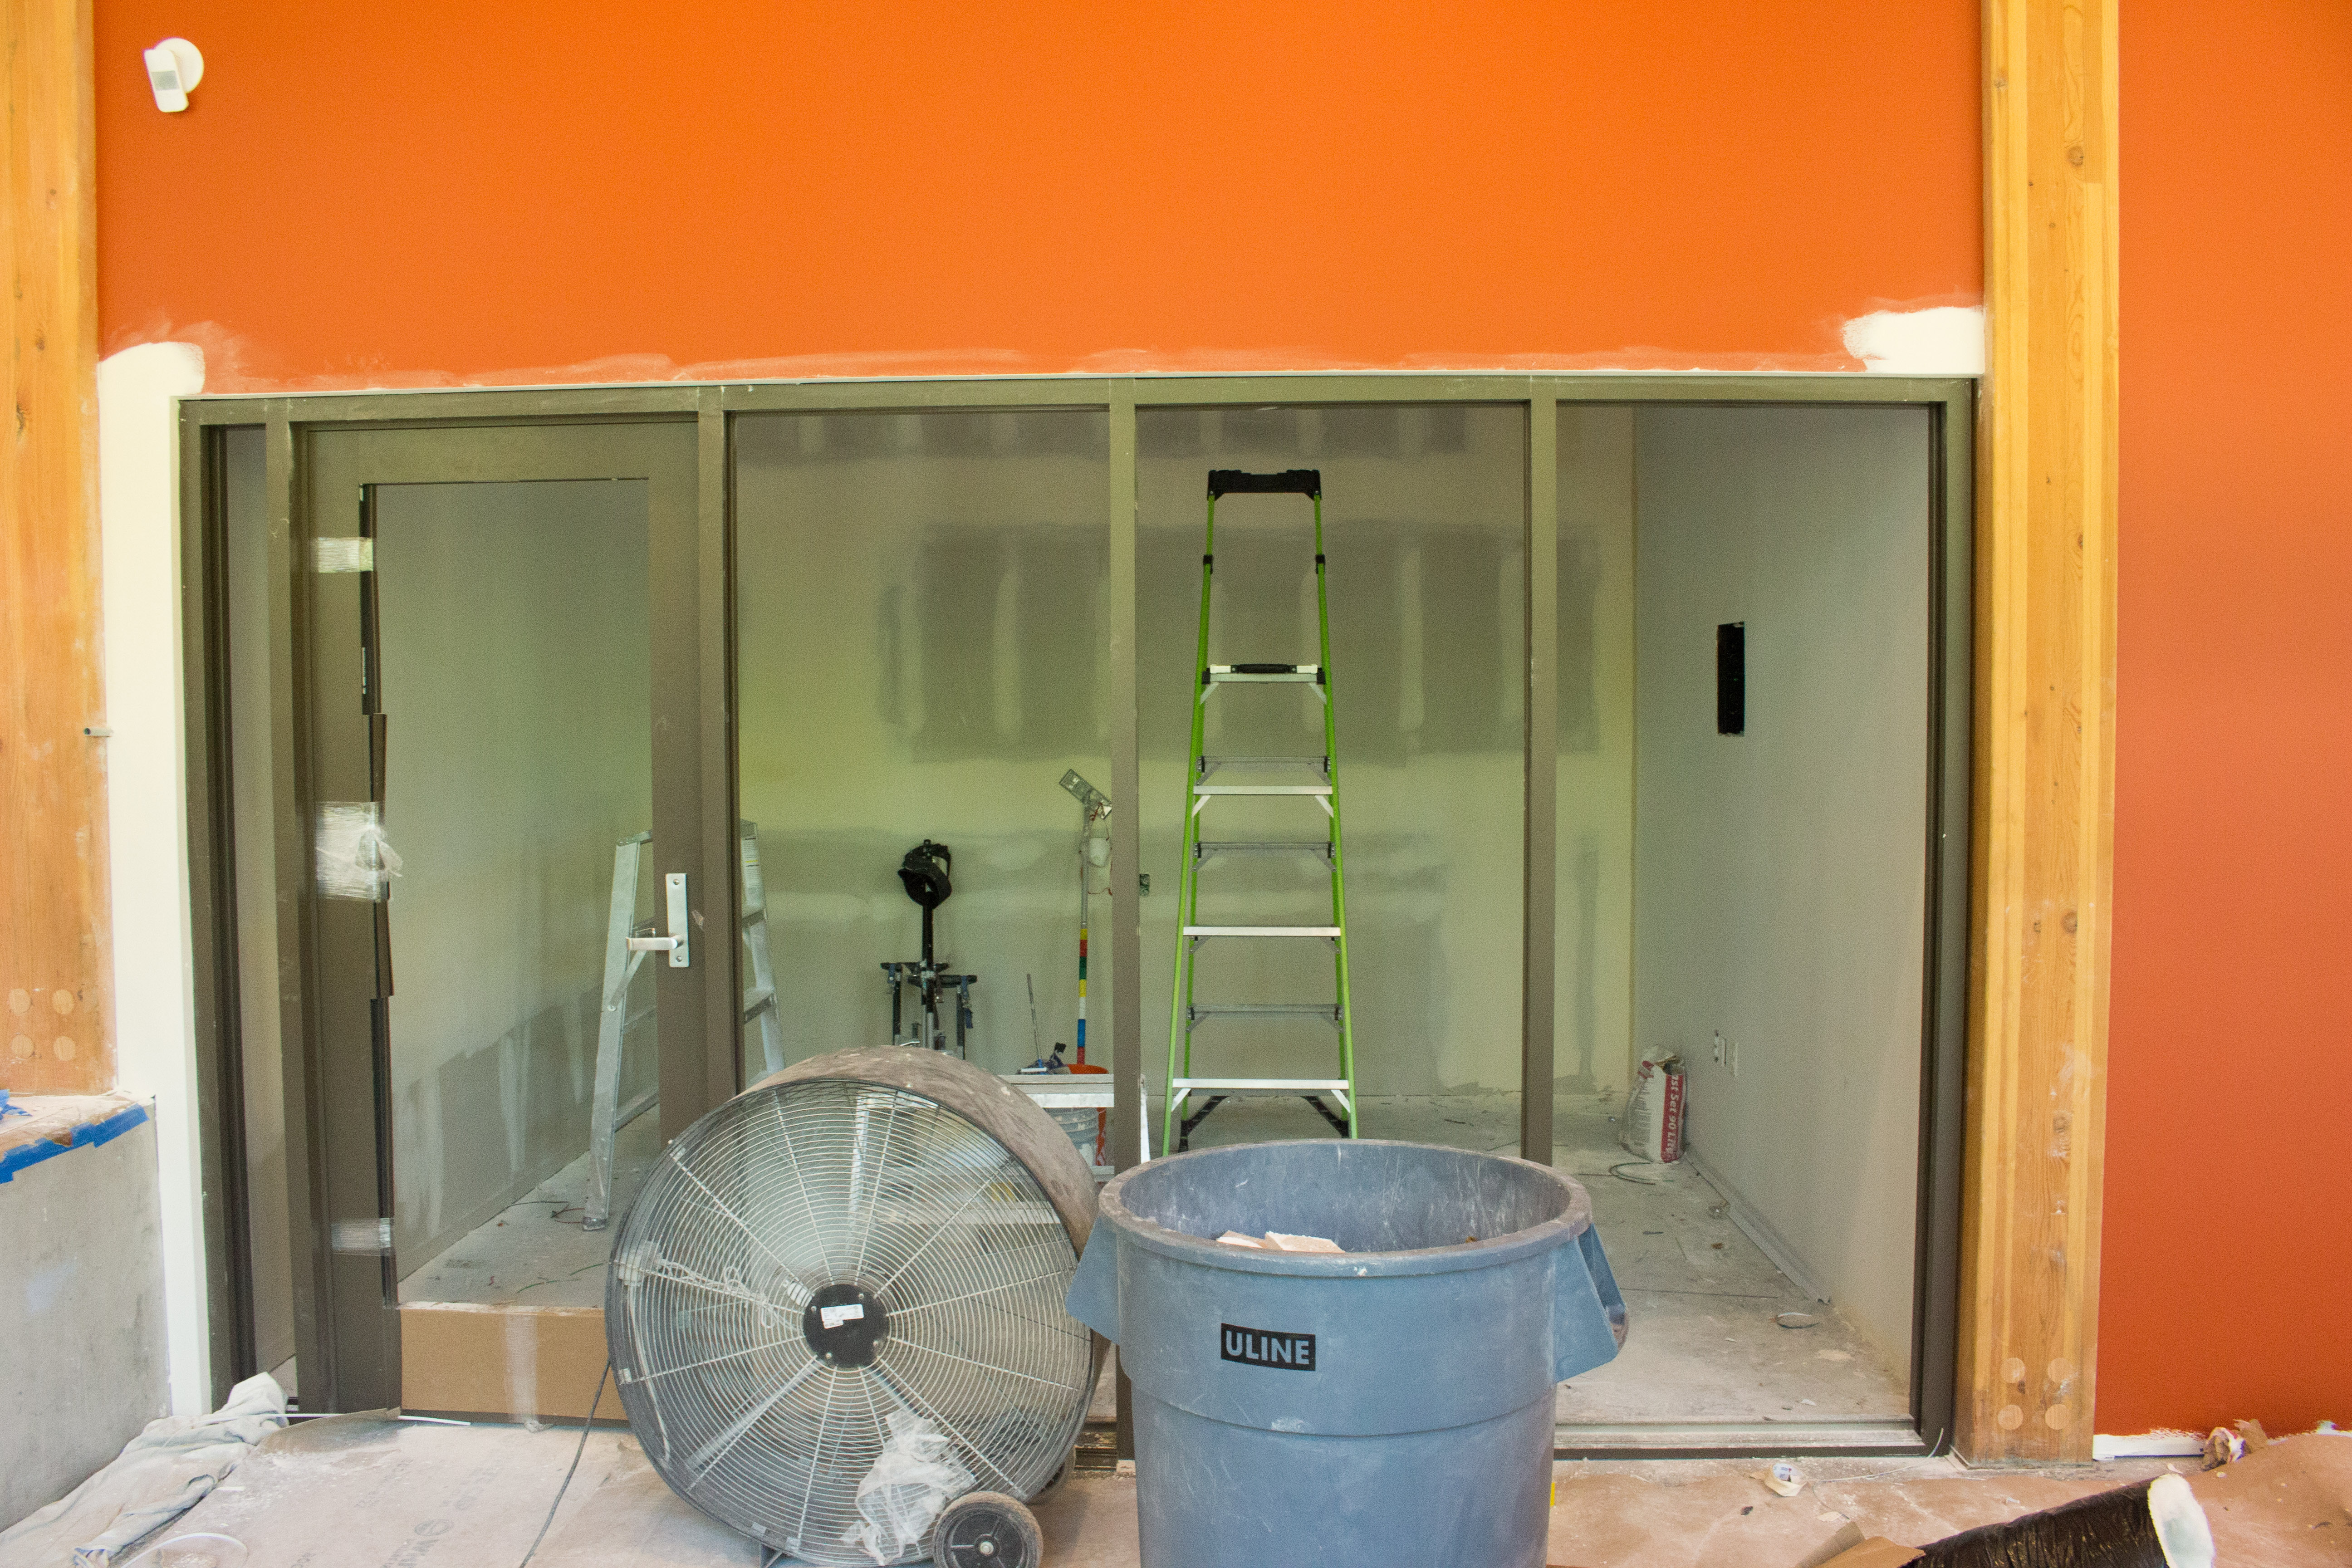 Glass Hall interior construction progress